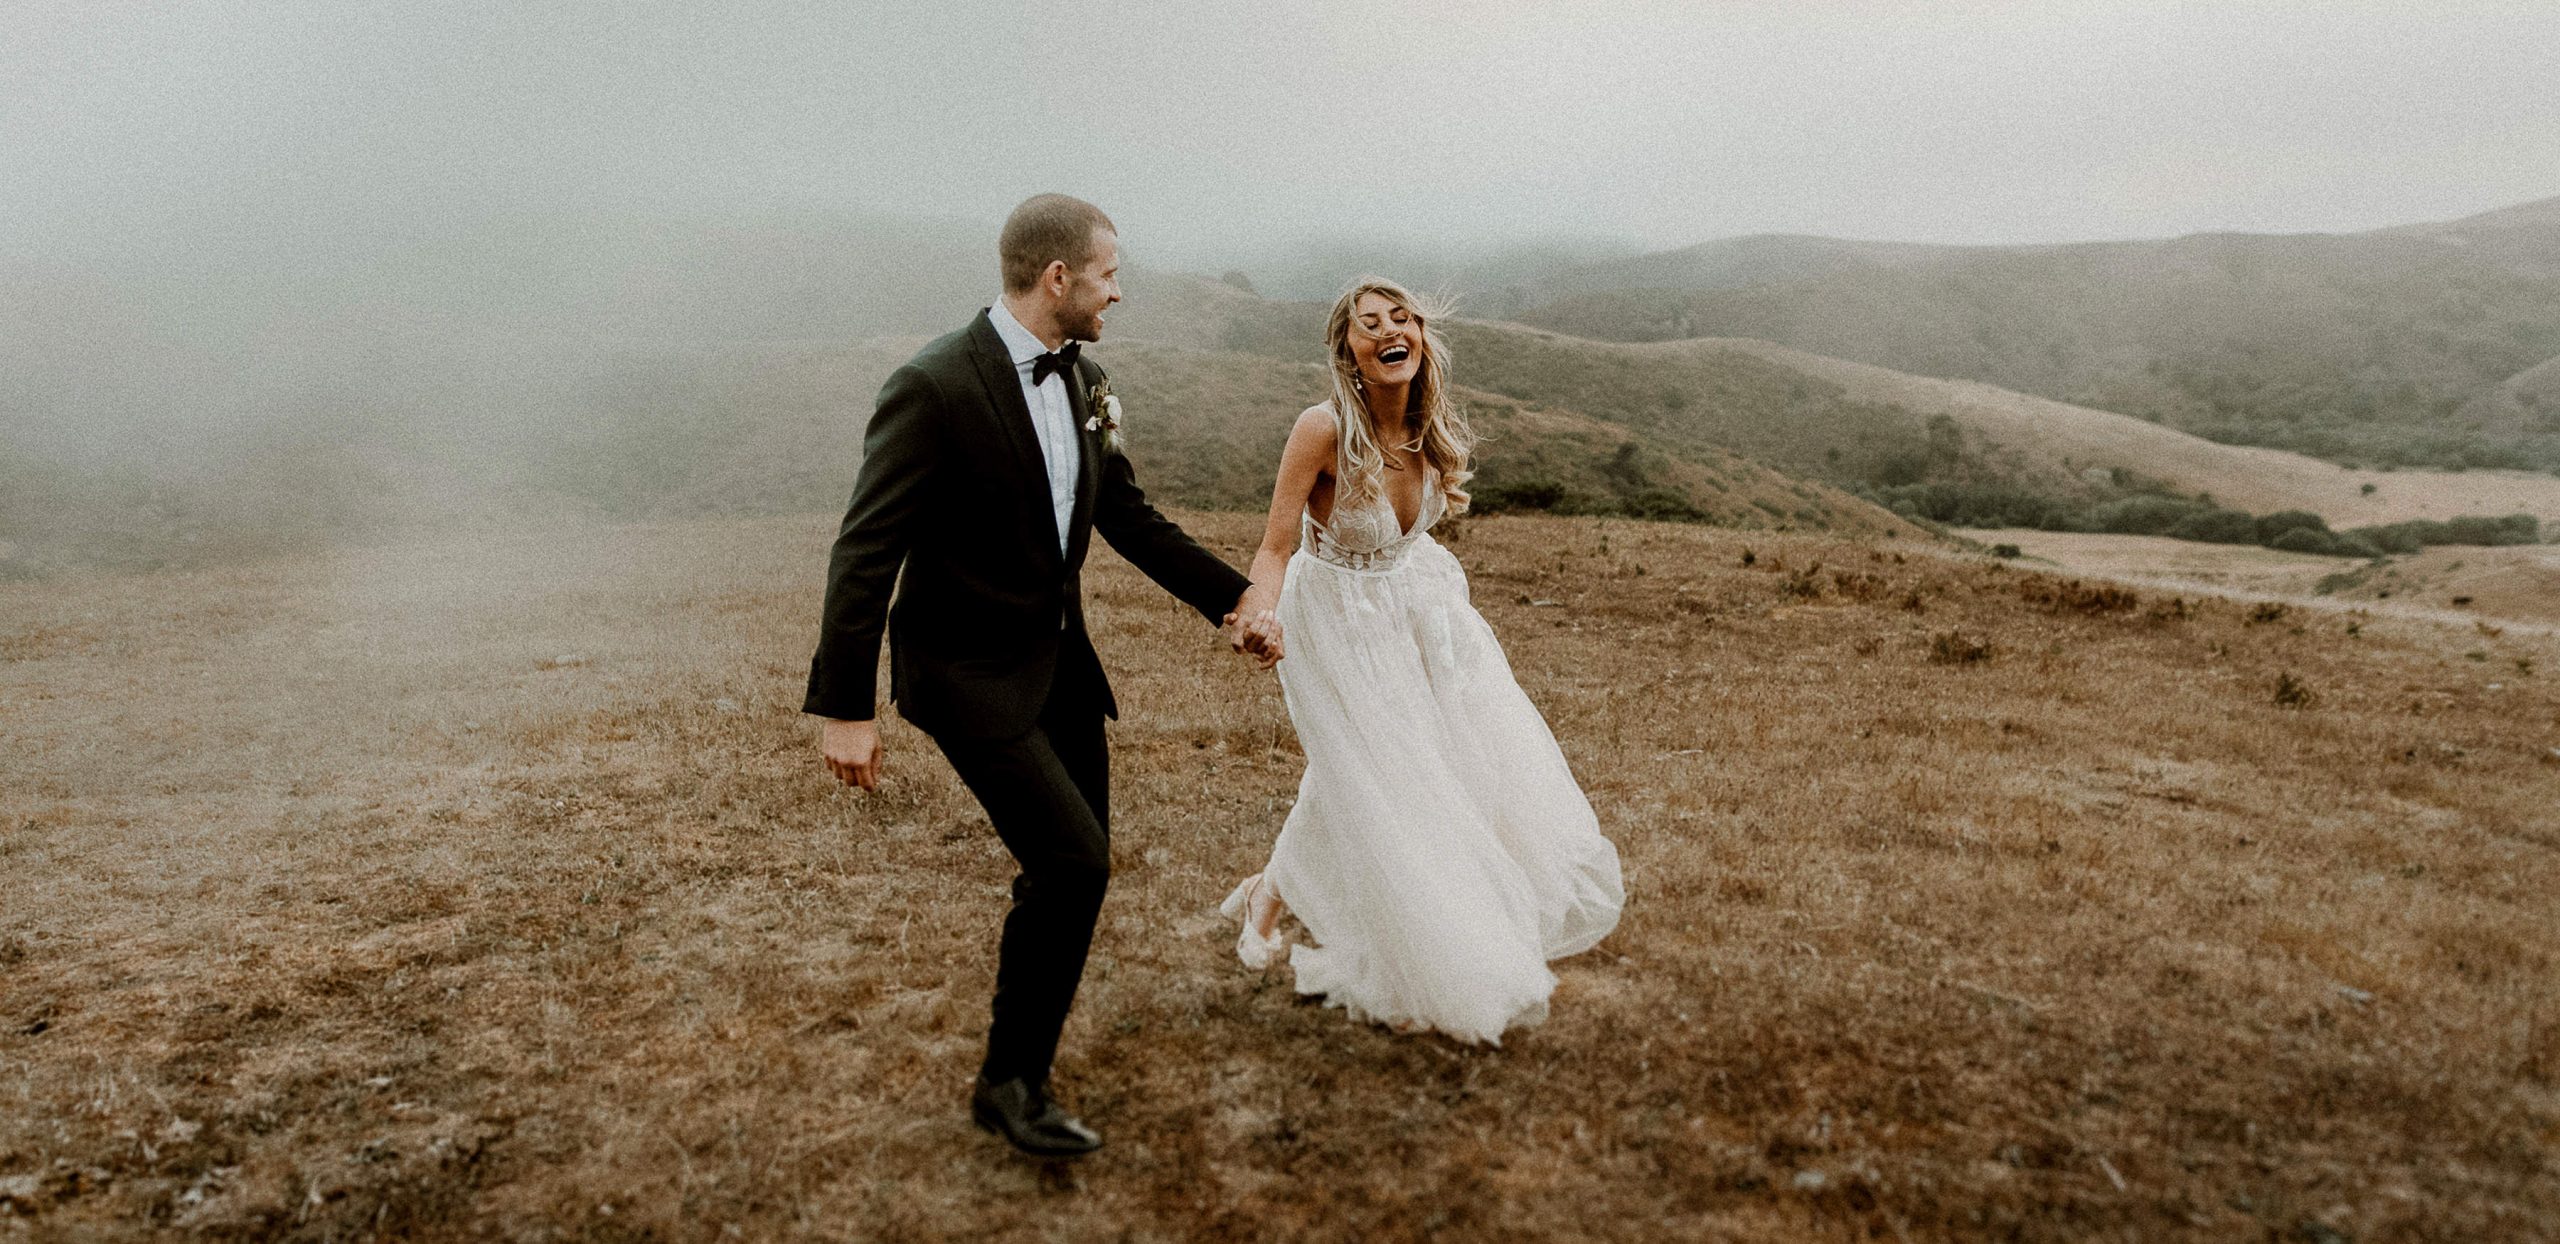 Los Angeles Wedding Photographers | Gina & Ryan Photography